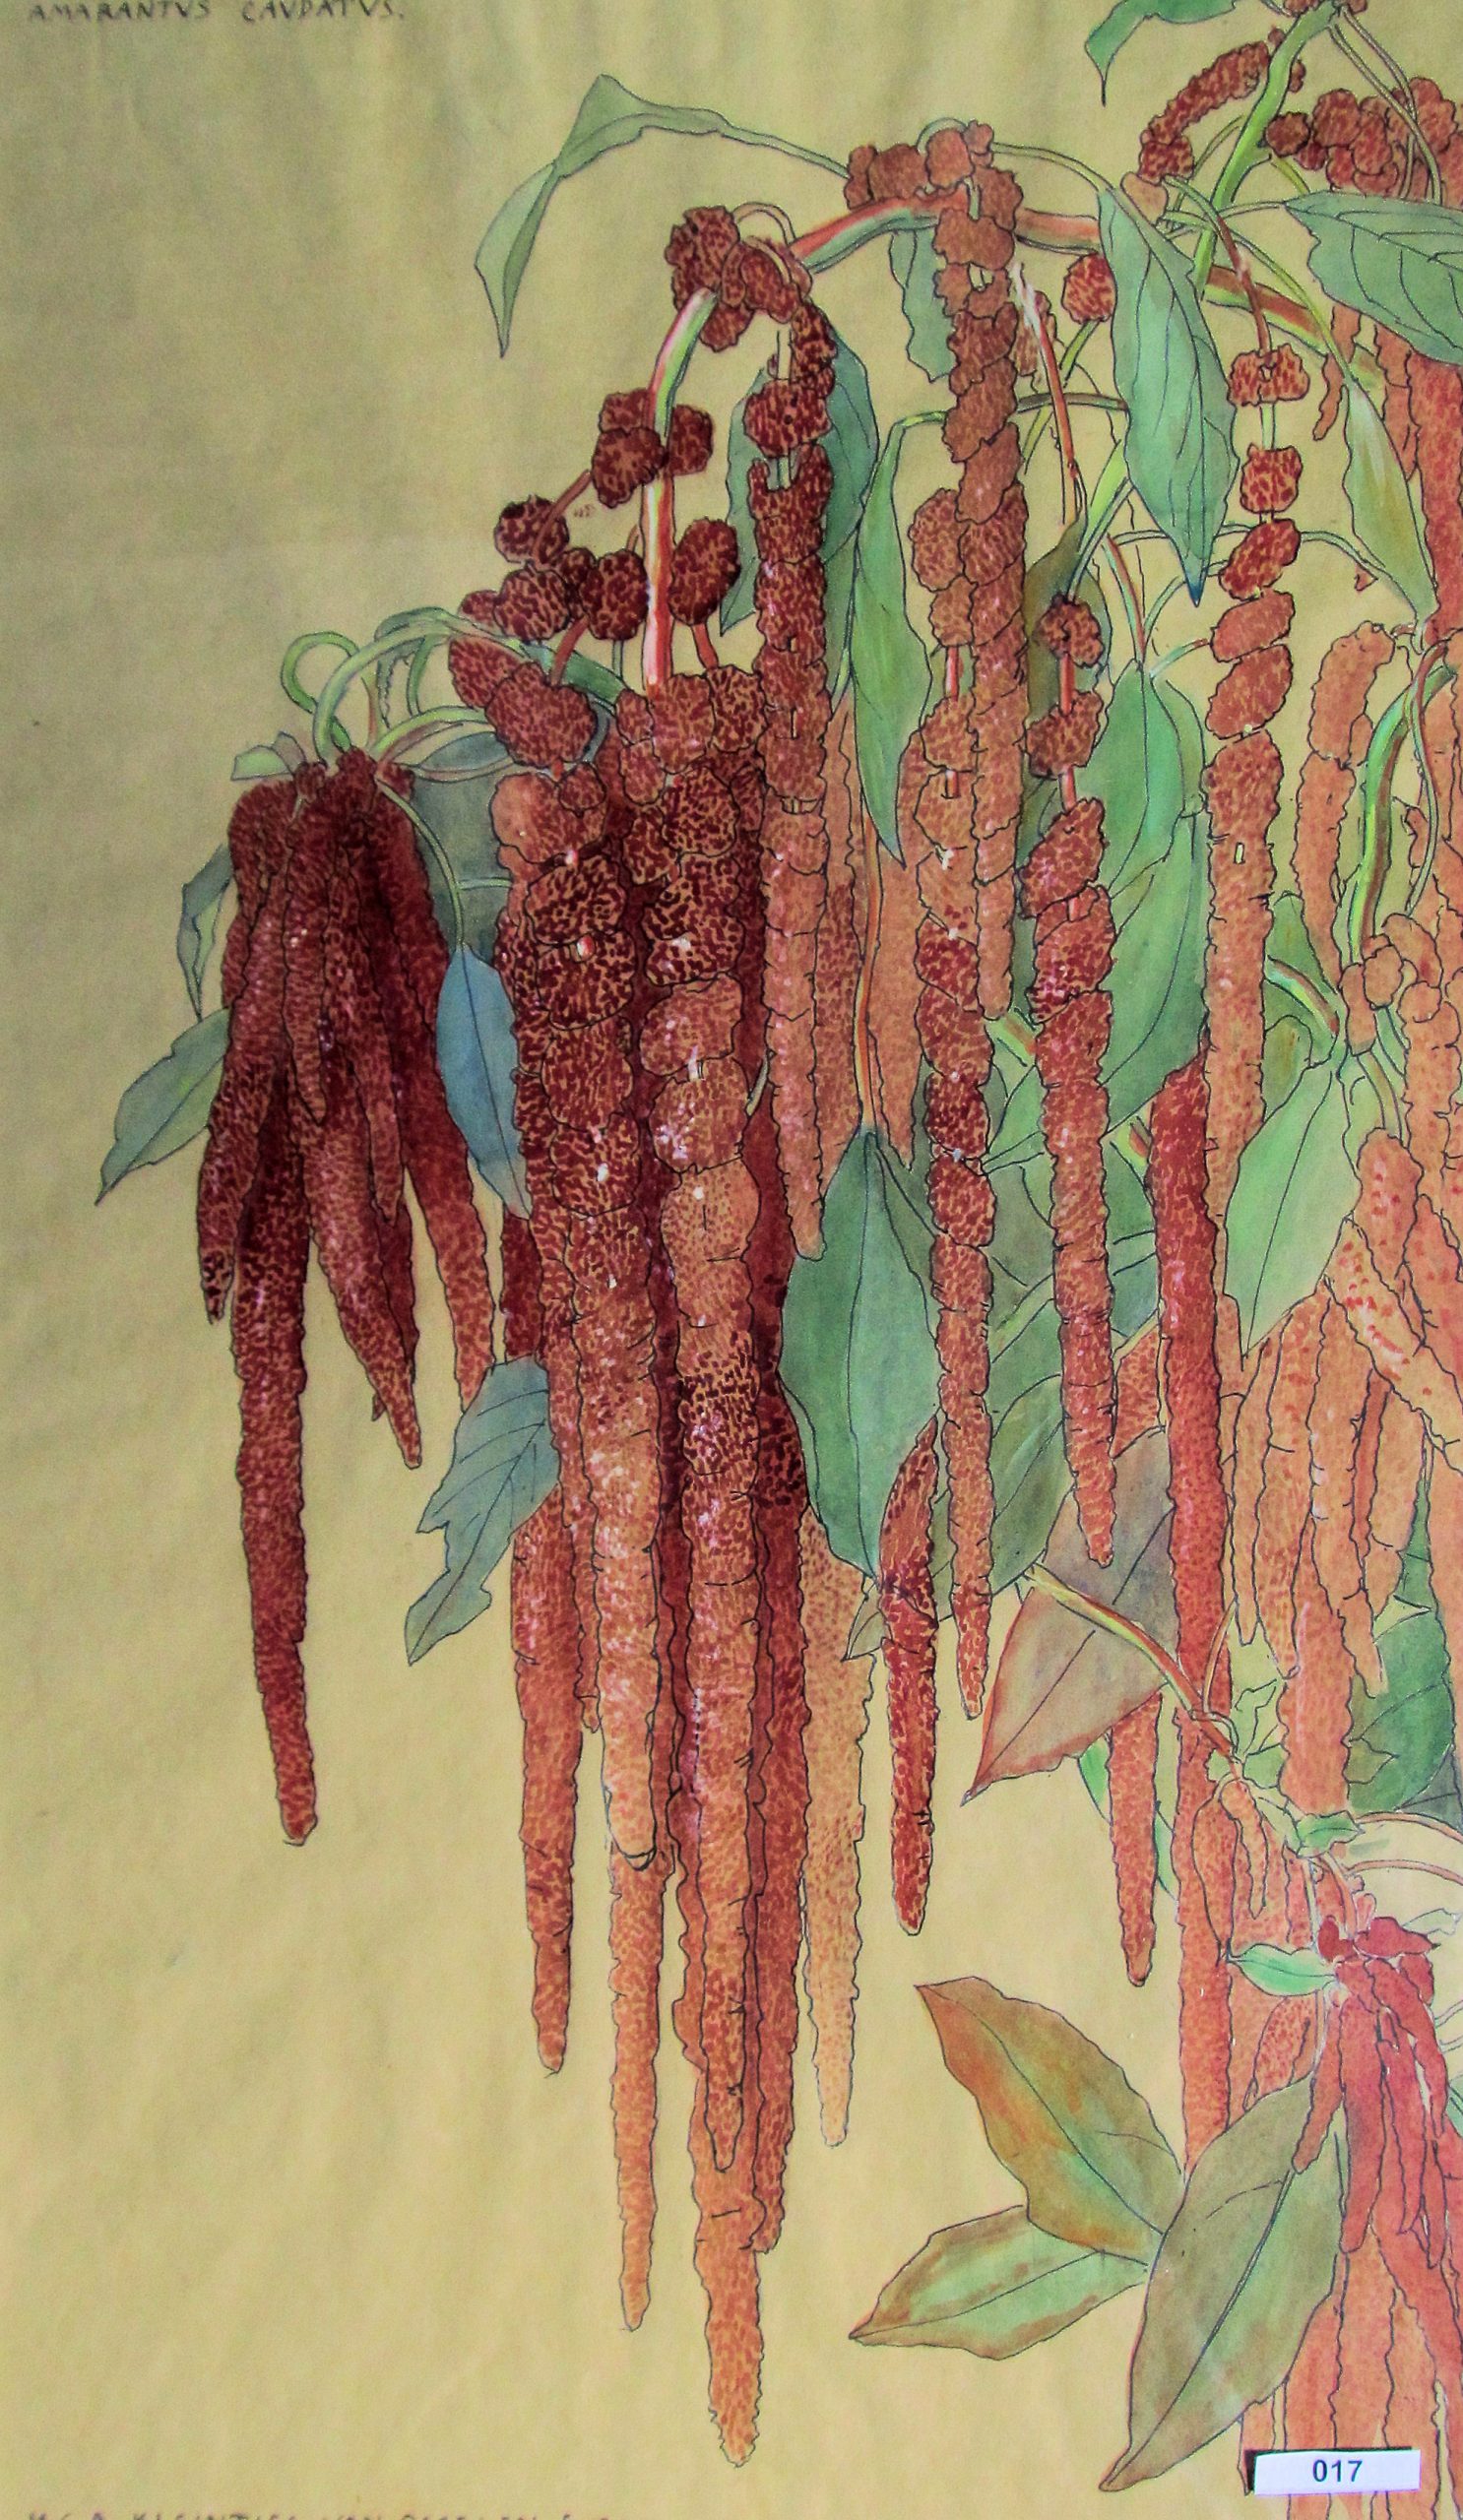 Exotische plant op Java: Amarantus Caupatus(1913)